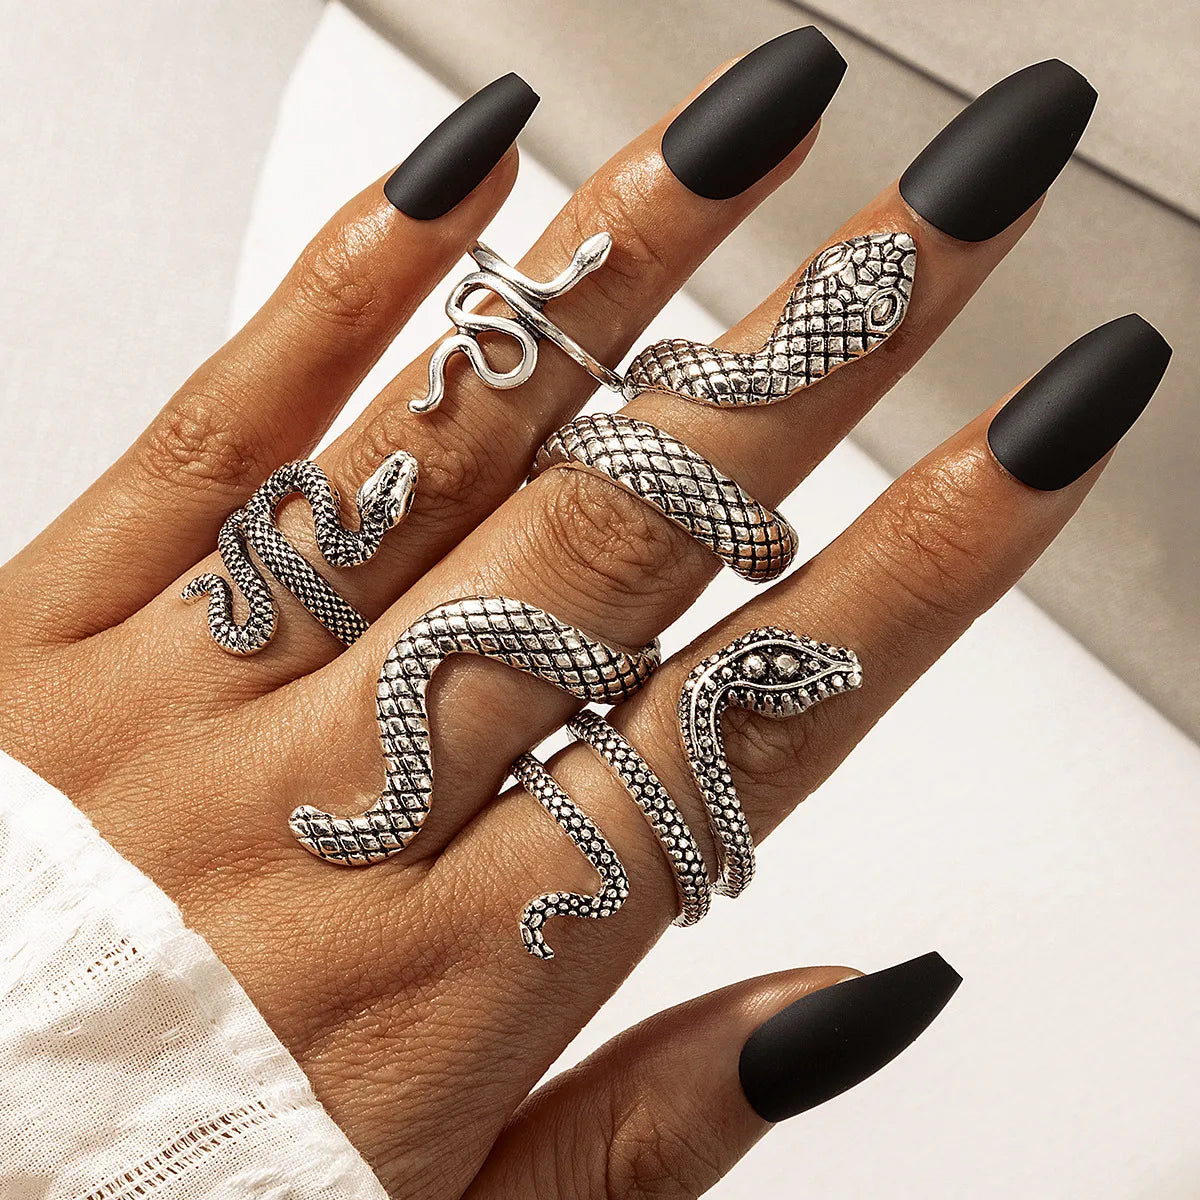 Vintage Long Snake Ring Set For Women Gold Silver Black Color Adjustable Finger Jewelry Gothic Female Gift